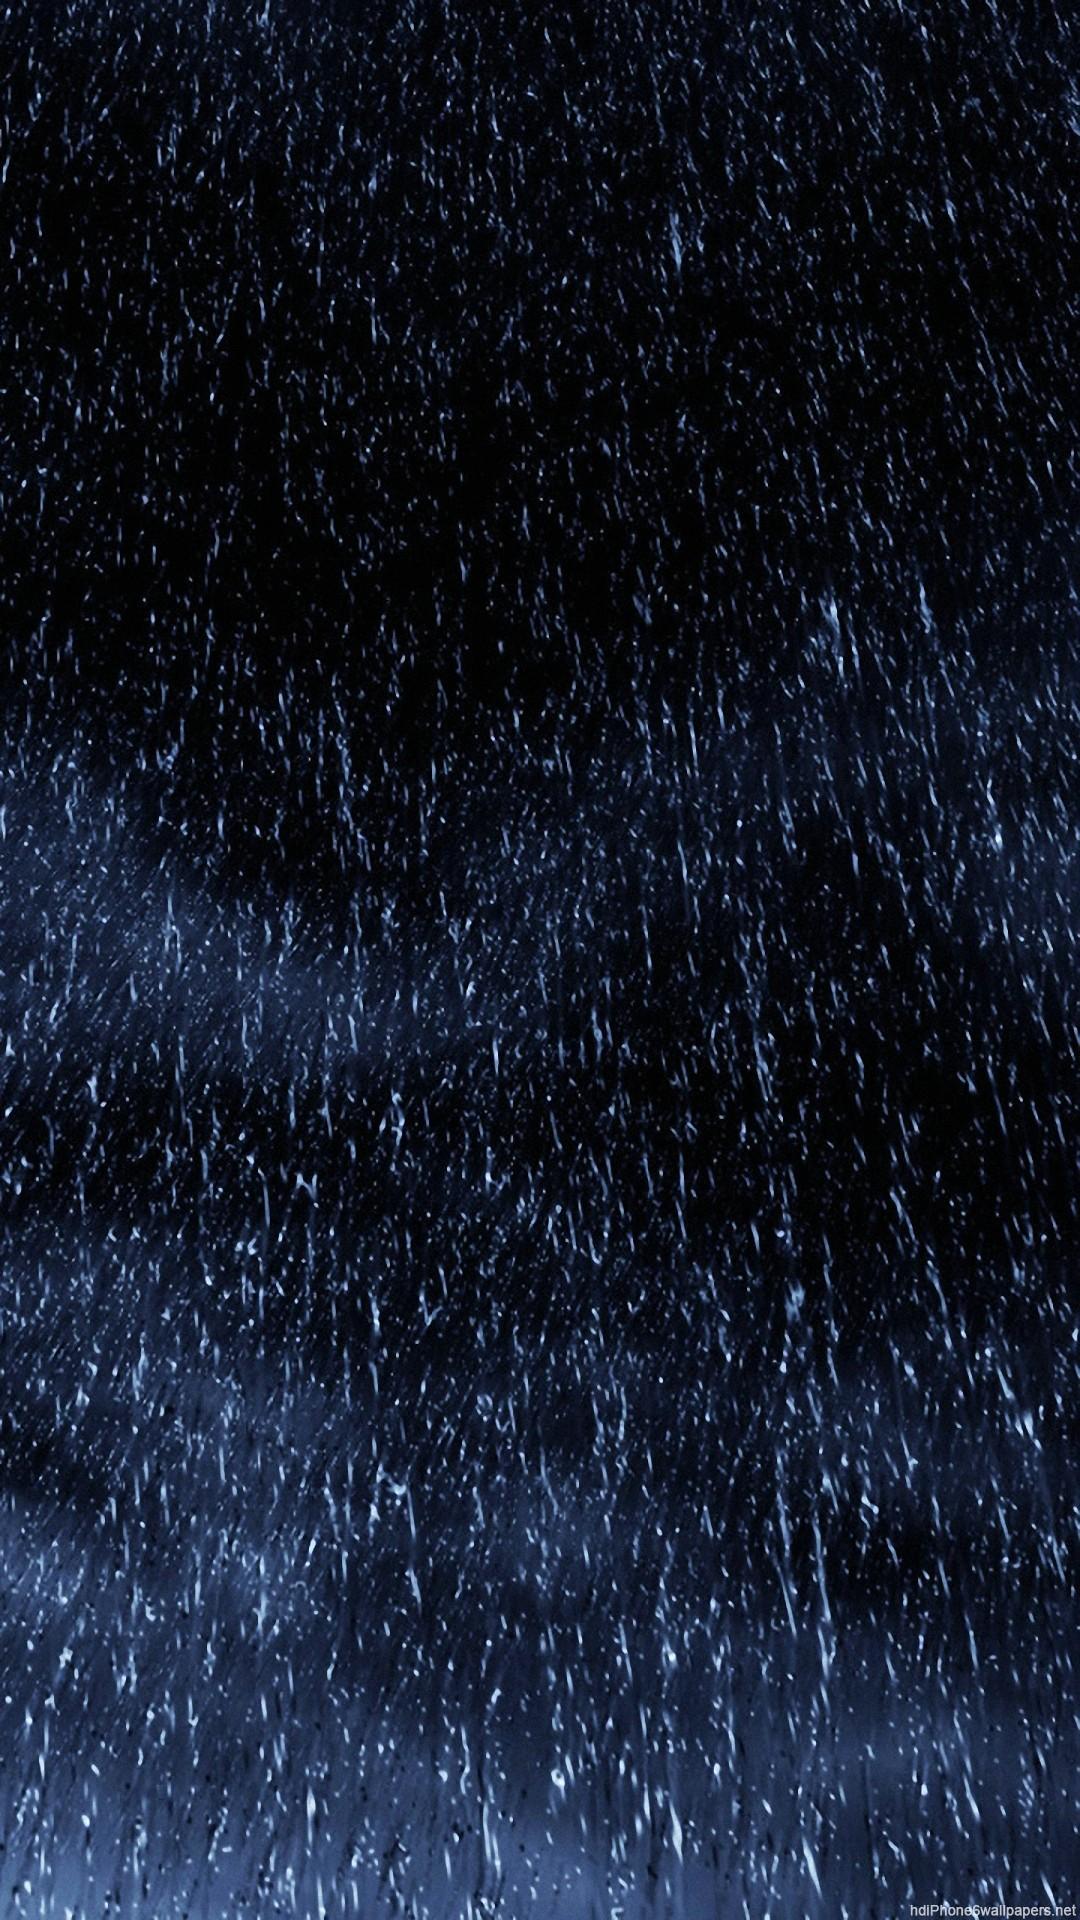 Rainy Wallpaper 1080p